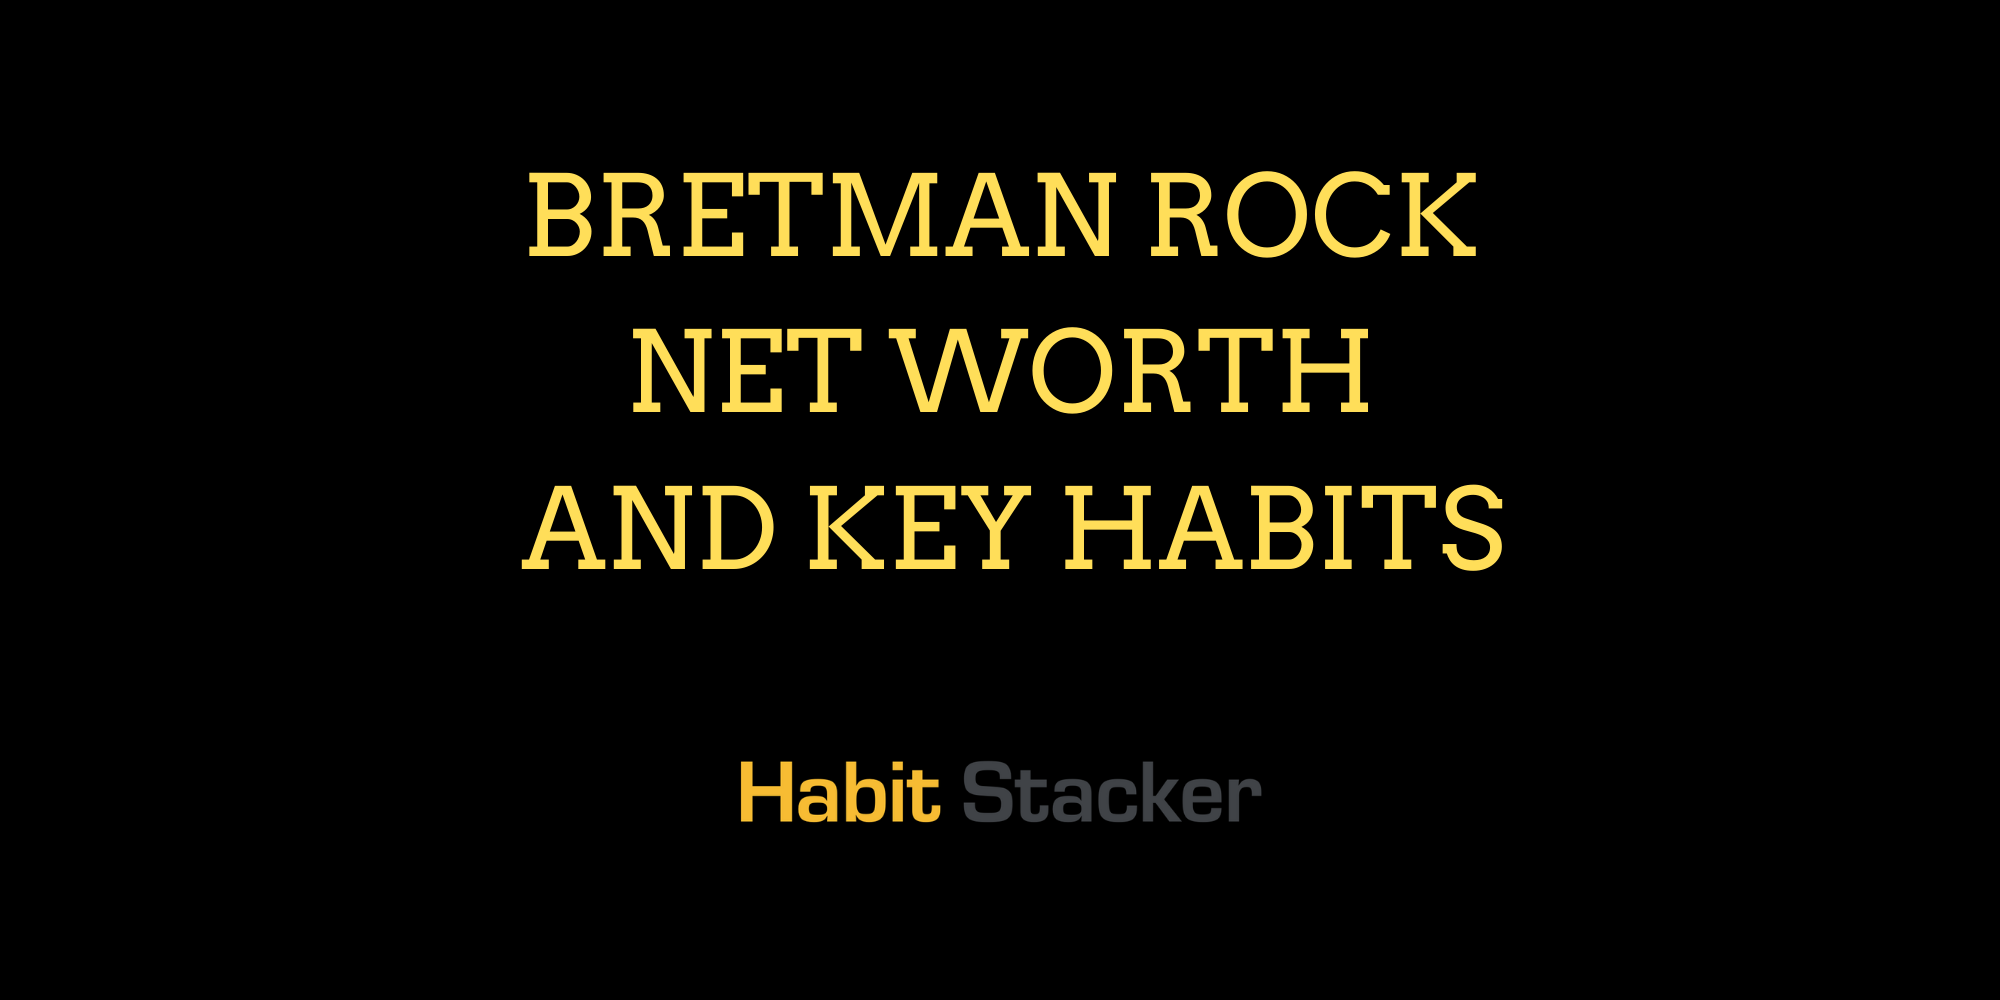 Bretman Rock Net Worth and Key Habits